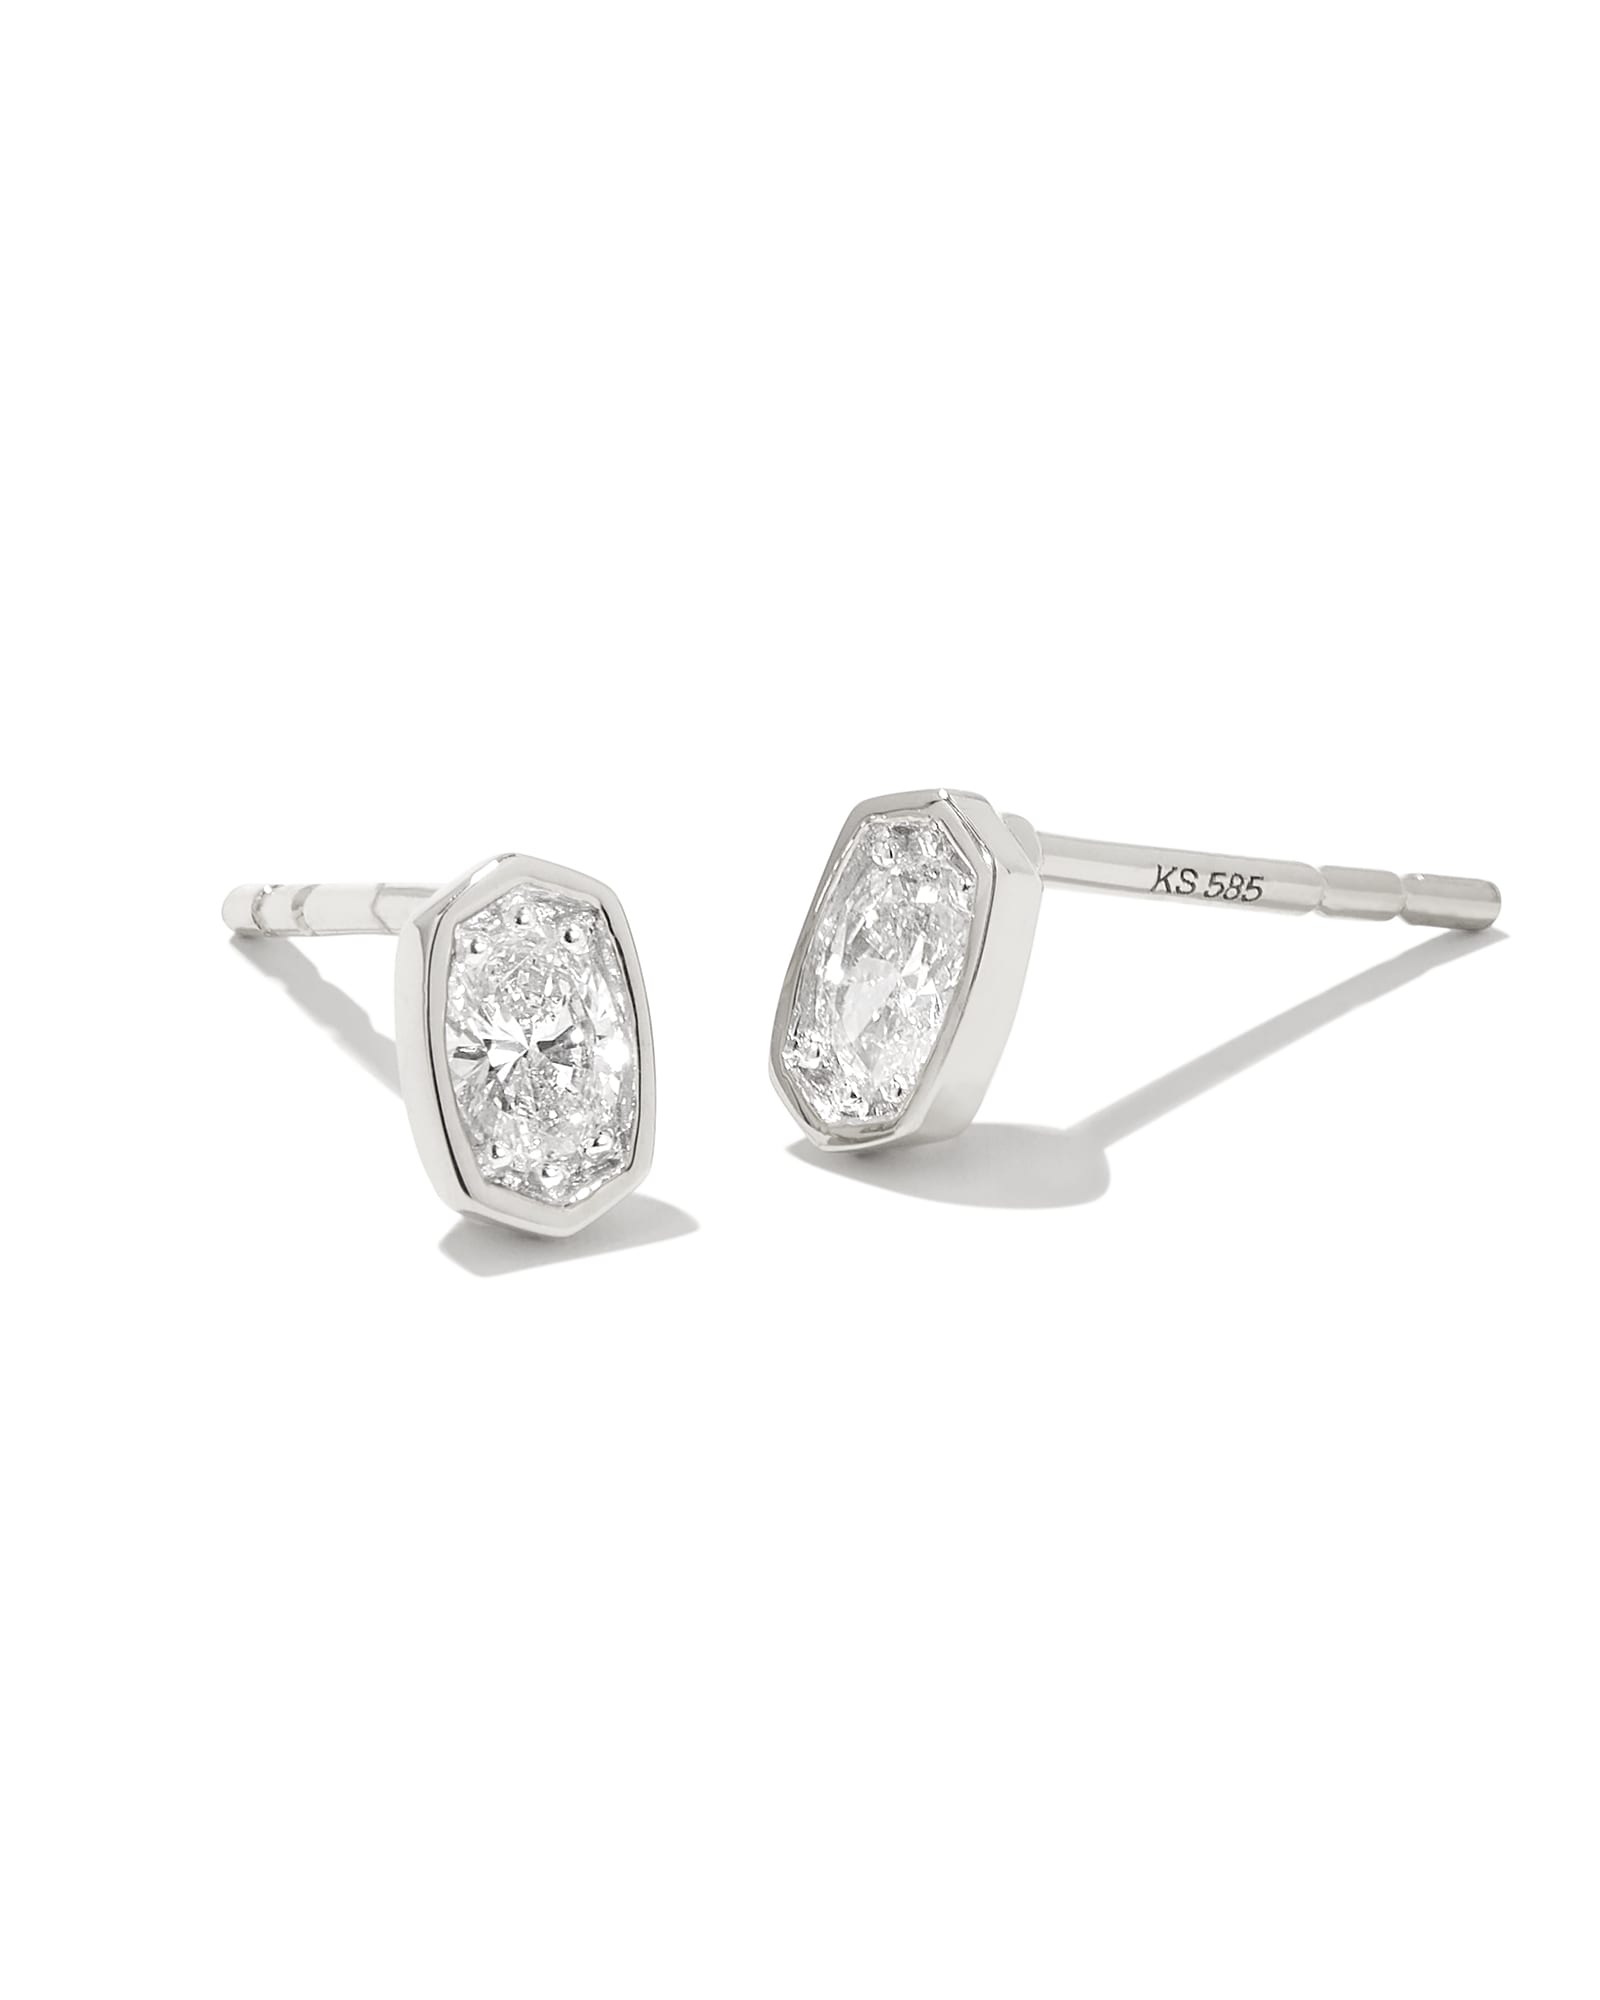 Kendra Scott Marisa 14k White Gold Oval Solitaire Stud Earrings in White Diamond | Diamonds